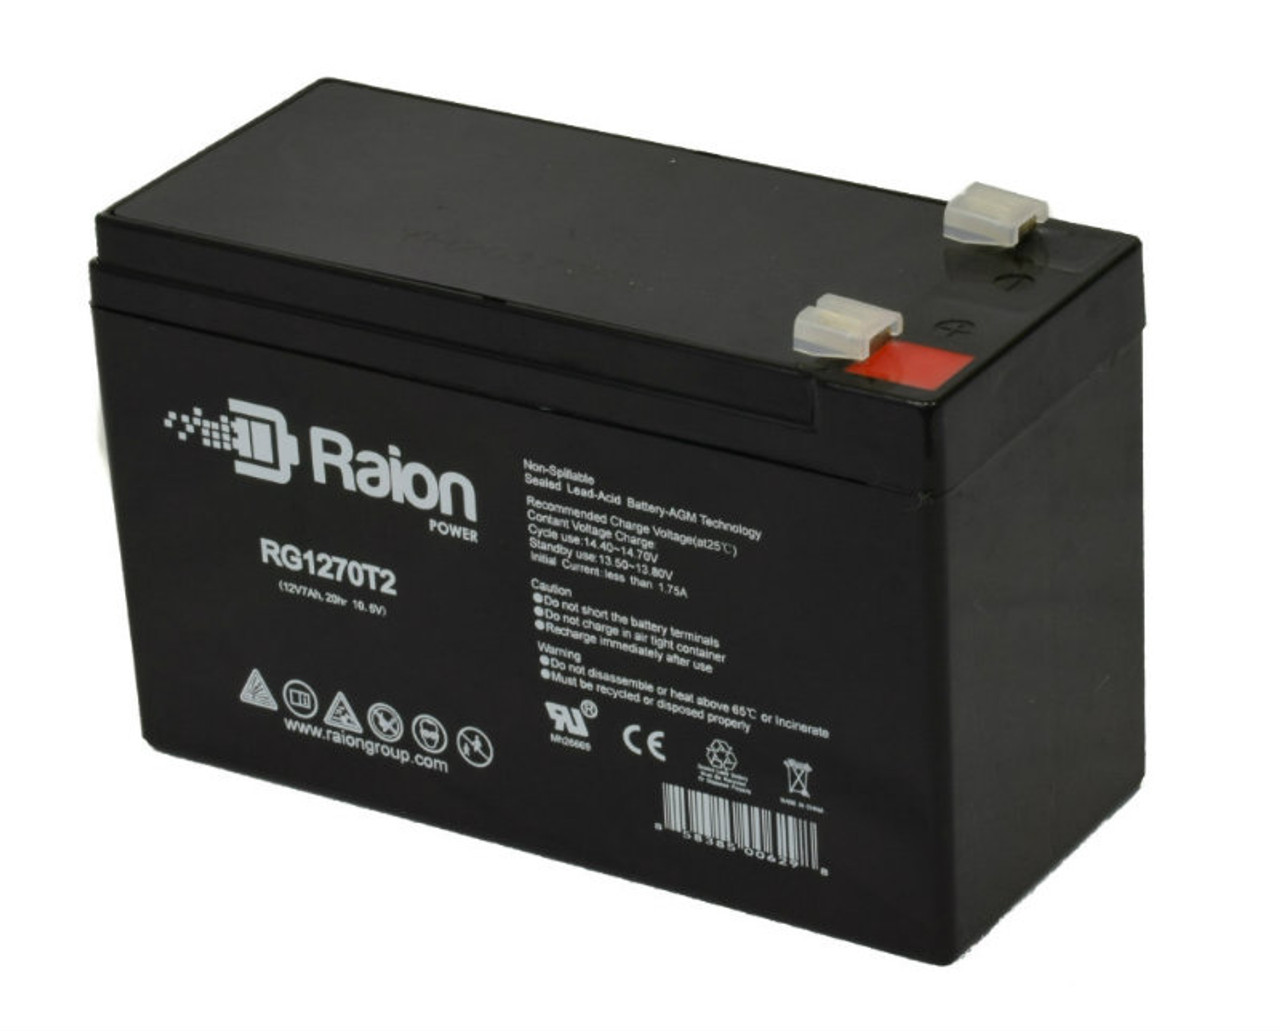 Raion Power Replacement 12V 7Ah RG1270T1 Fire Alarm Battery for Altronix AL6246C